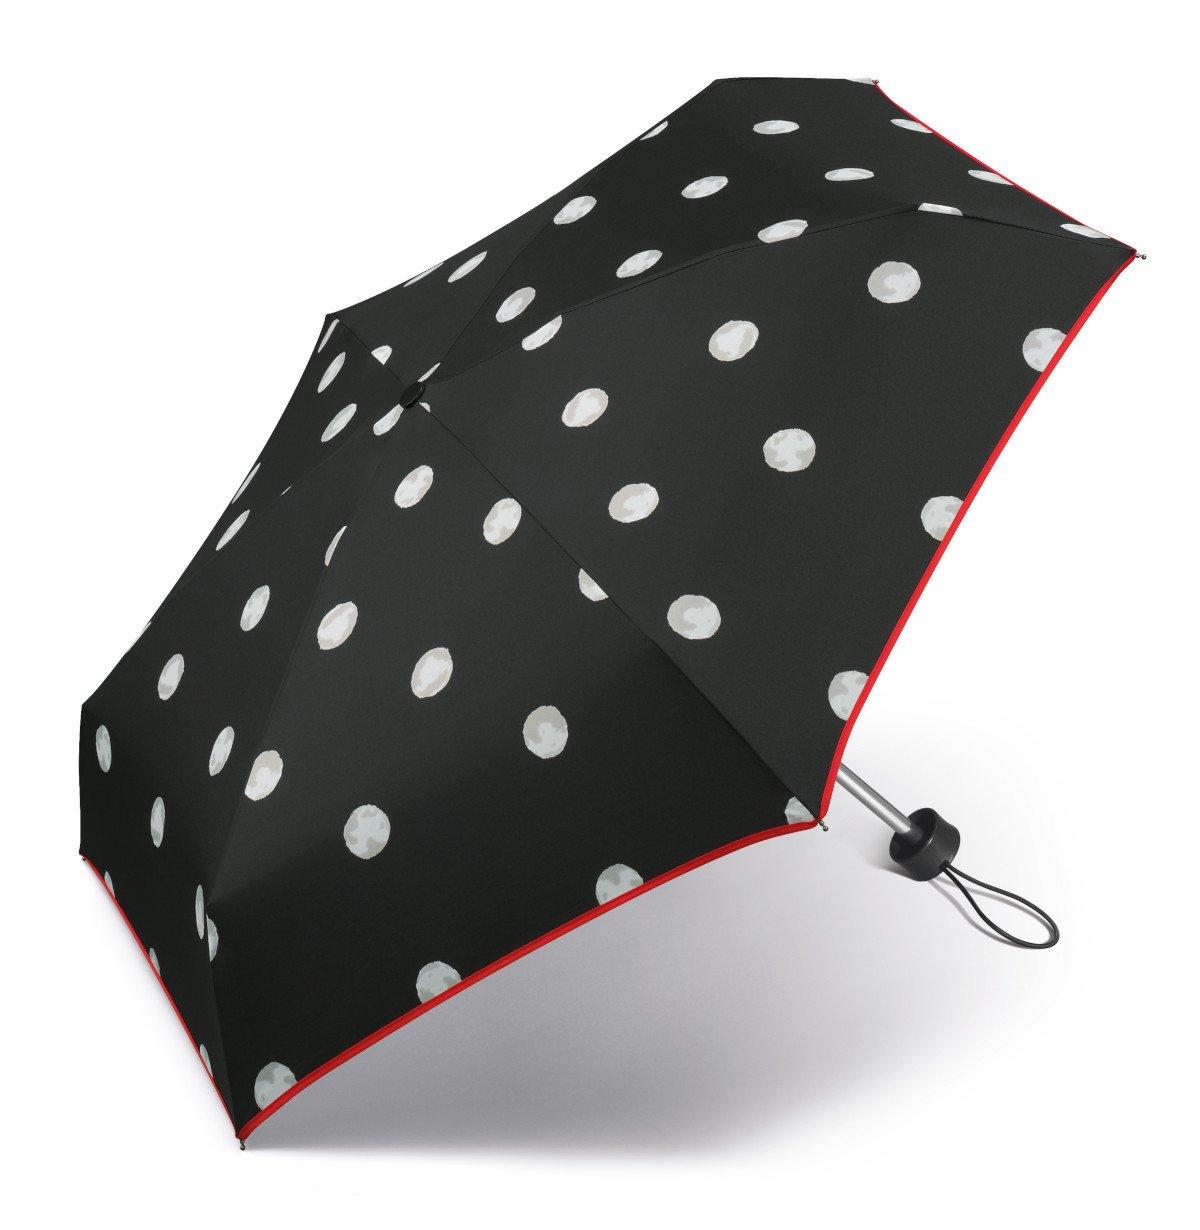 Paraguas Plegable Mini Topos Blanco y Negro - Paraguas Originales, Paraguas plegable Mujer, Paraguas plegables originales Que puedo Regalar